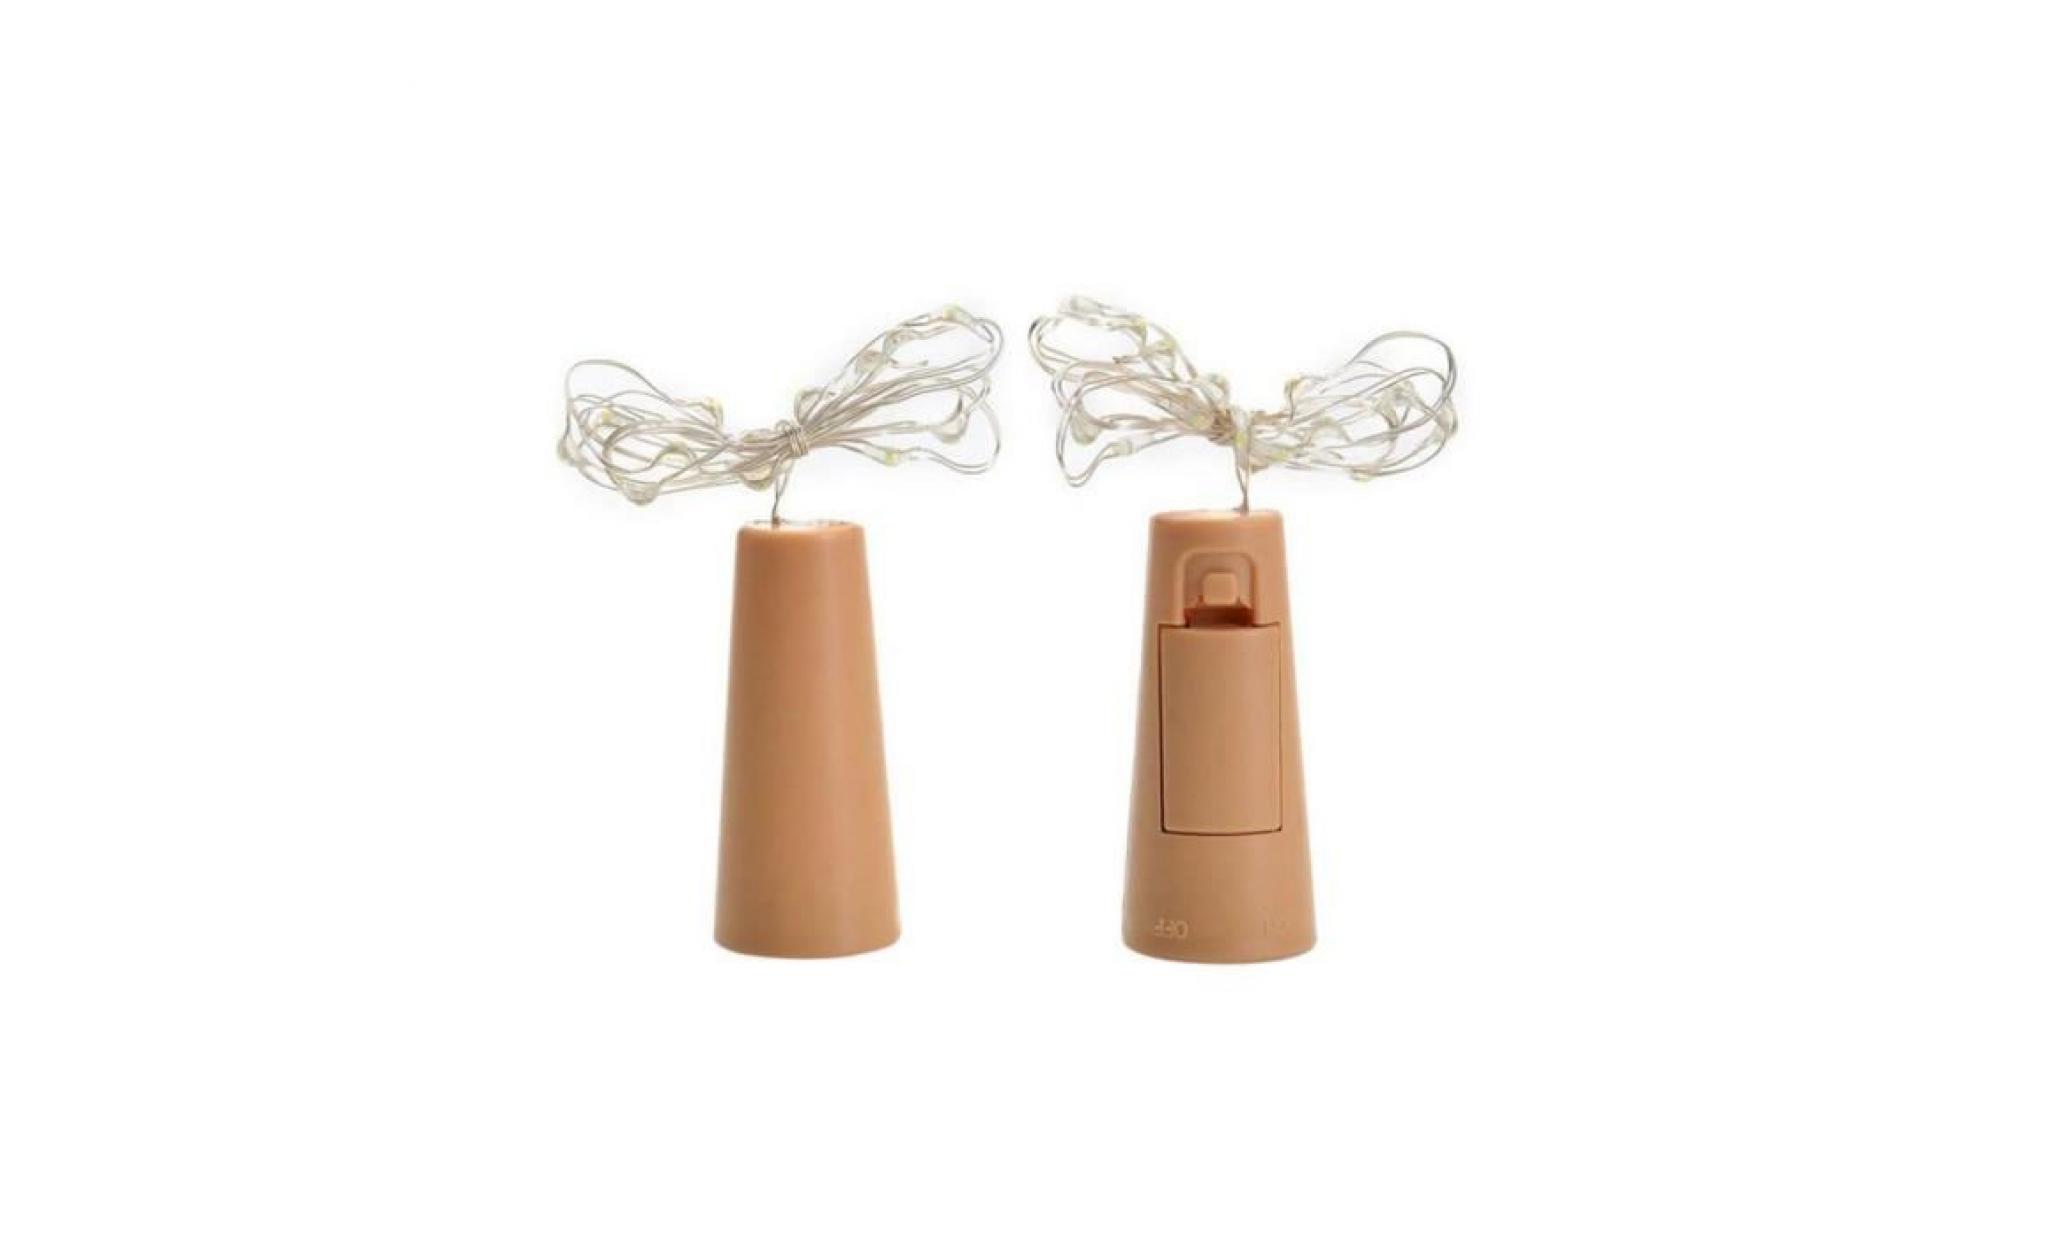 8led copper wire wine bottle cork shape light starry light wedding decor qinhig1606 pas cher